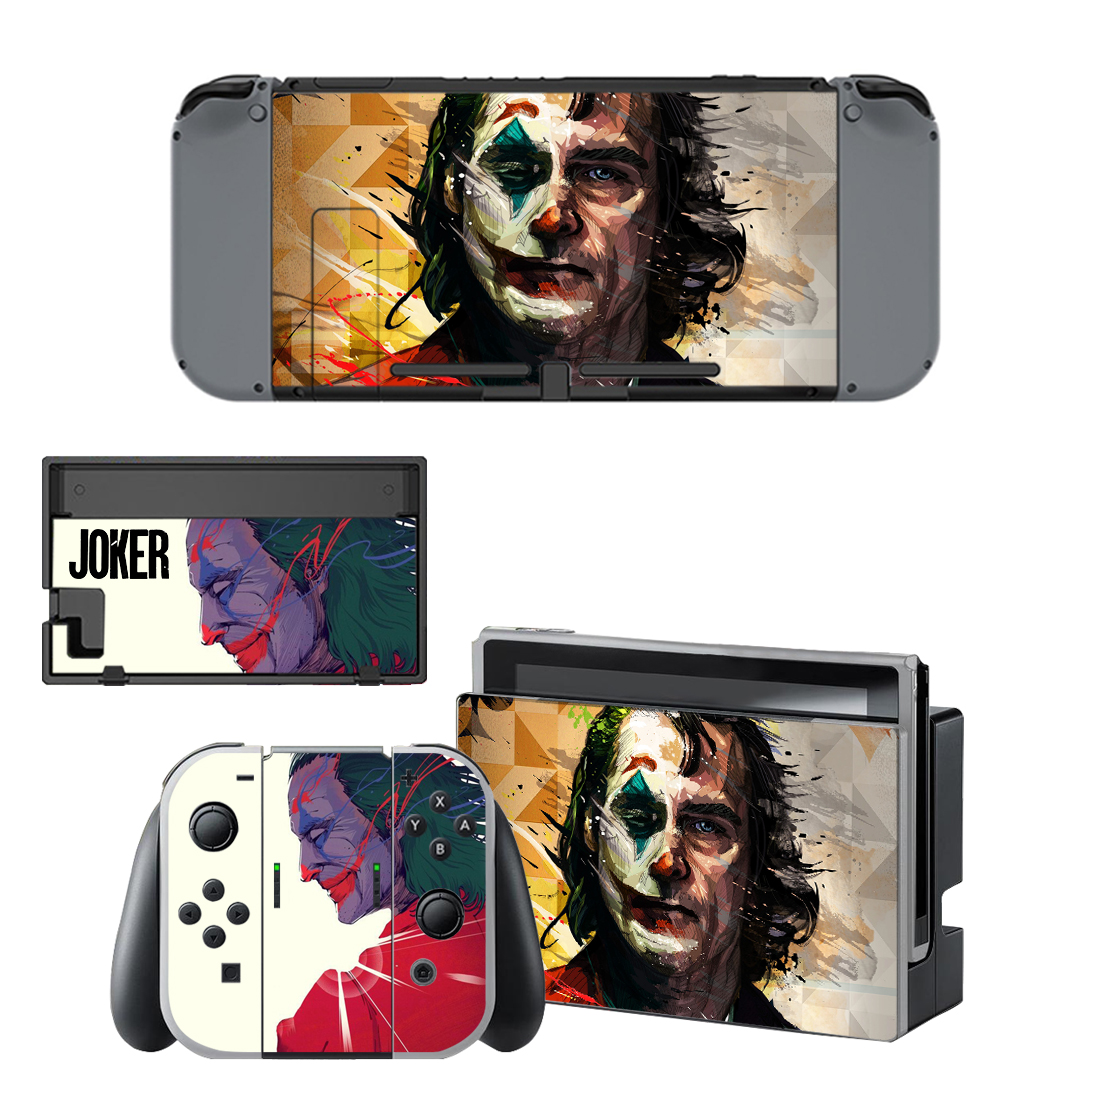 Joker Nintendo Switch Skin Sticker Decal